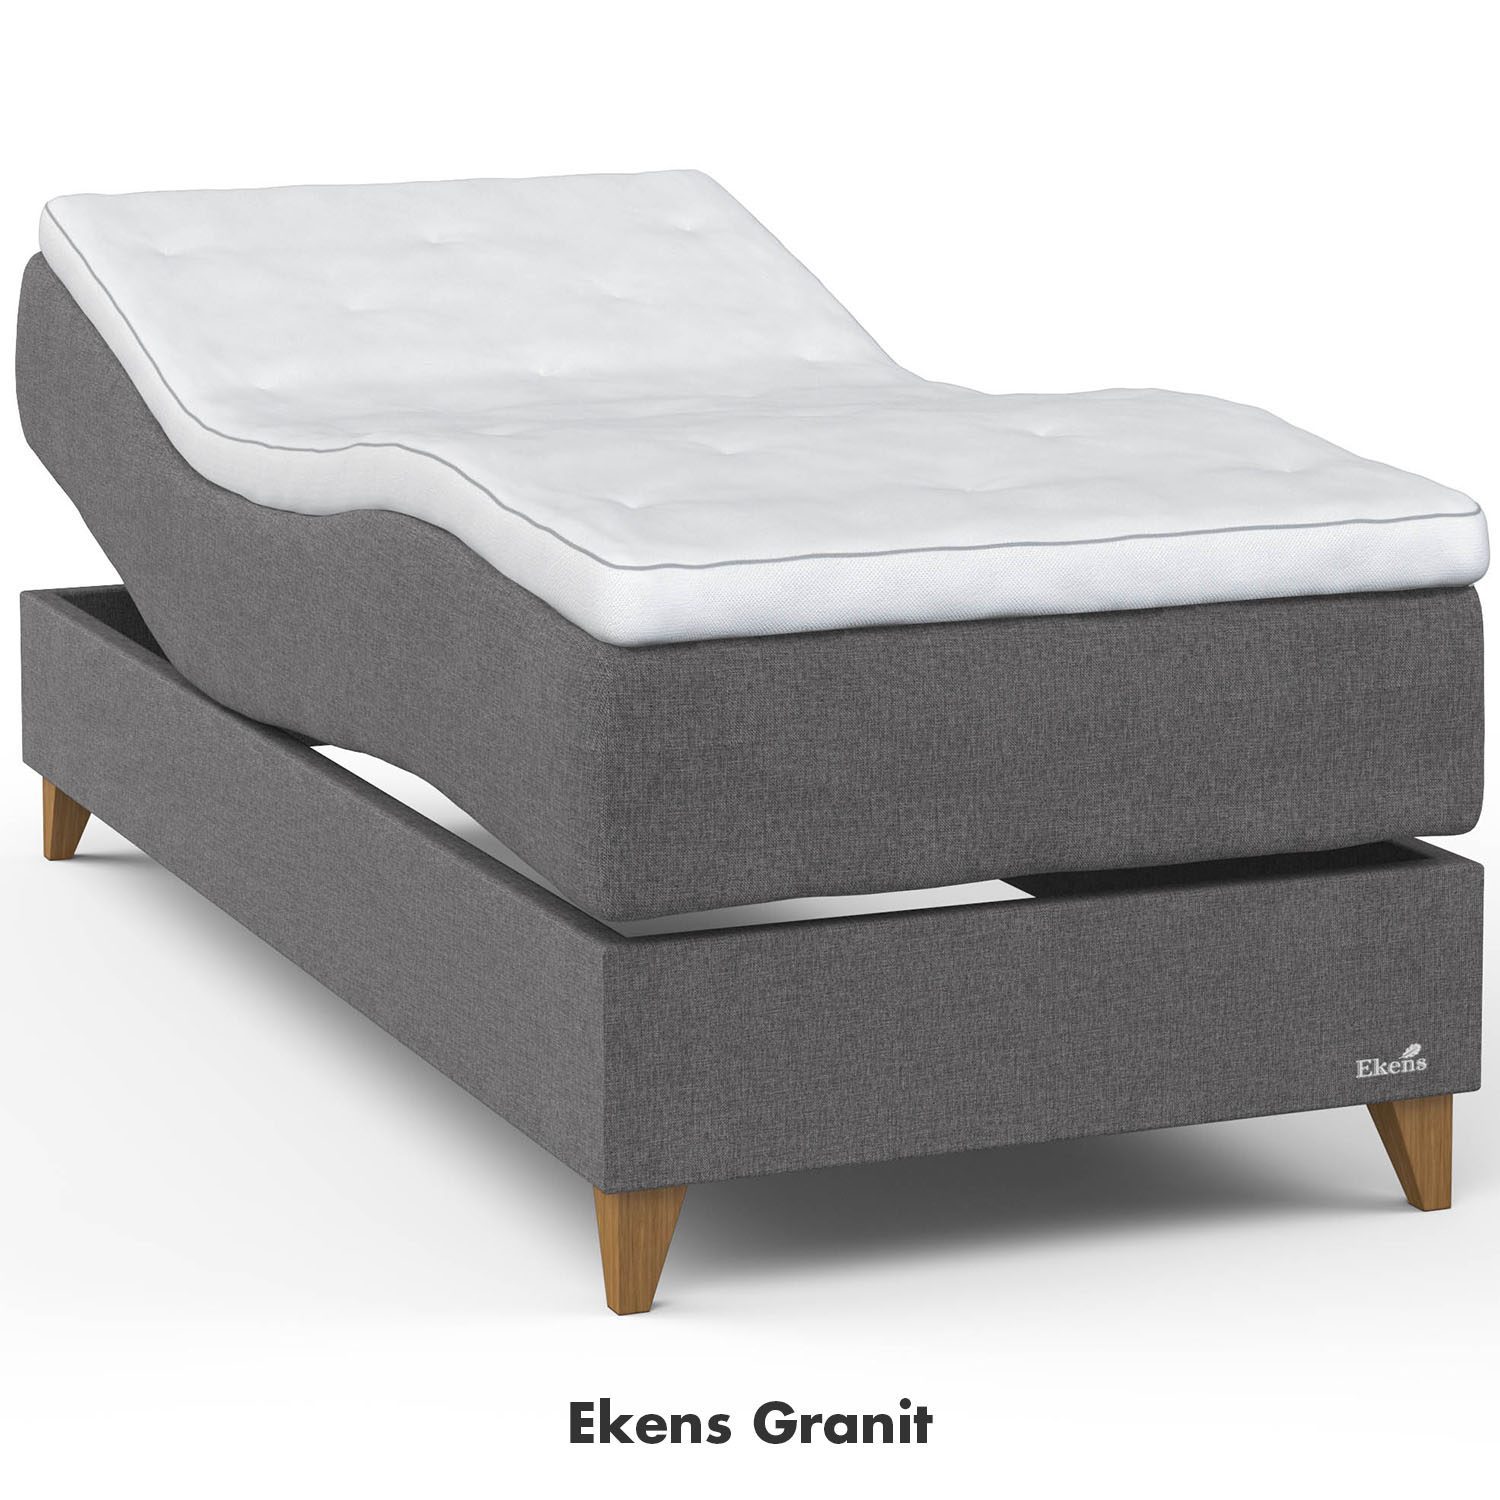 Ekens Elegans ställbar säng i tyget granit.